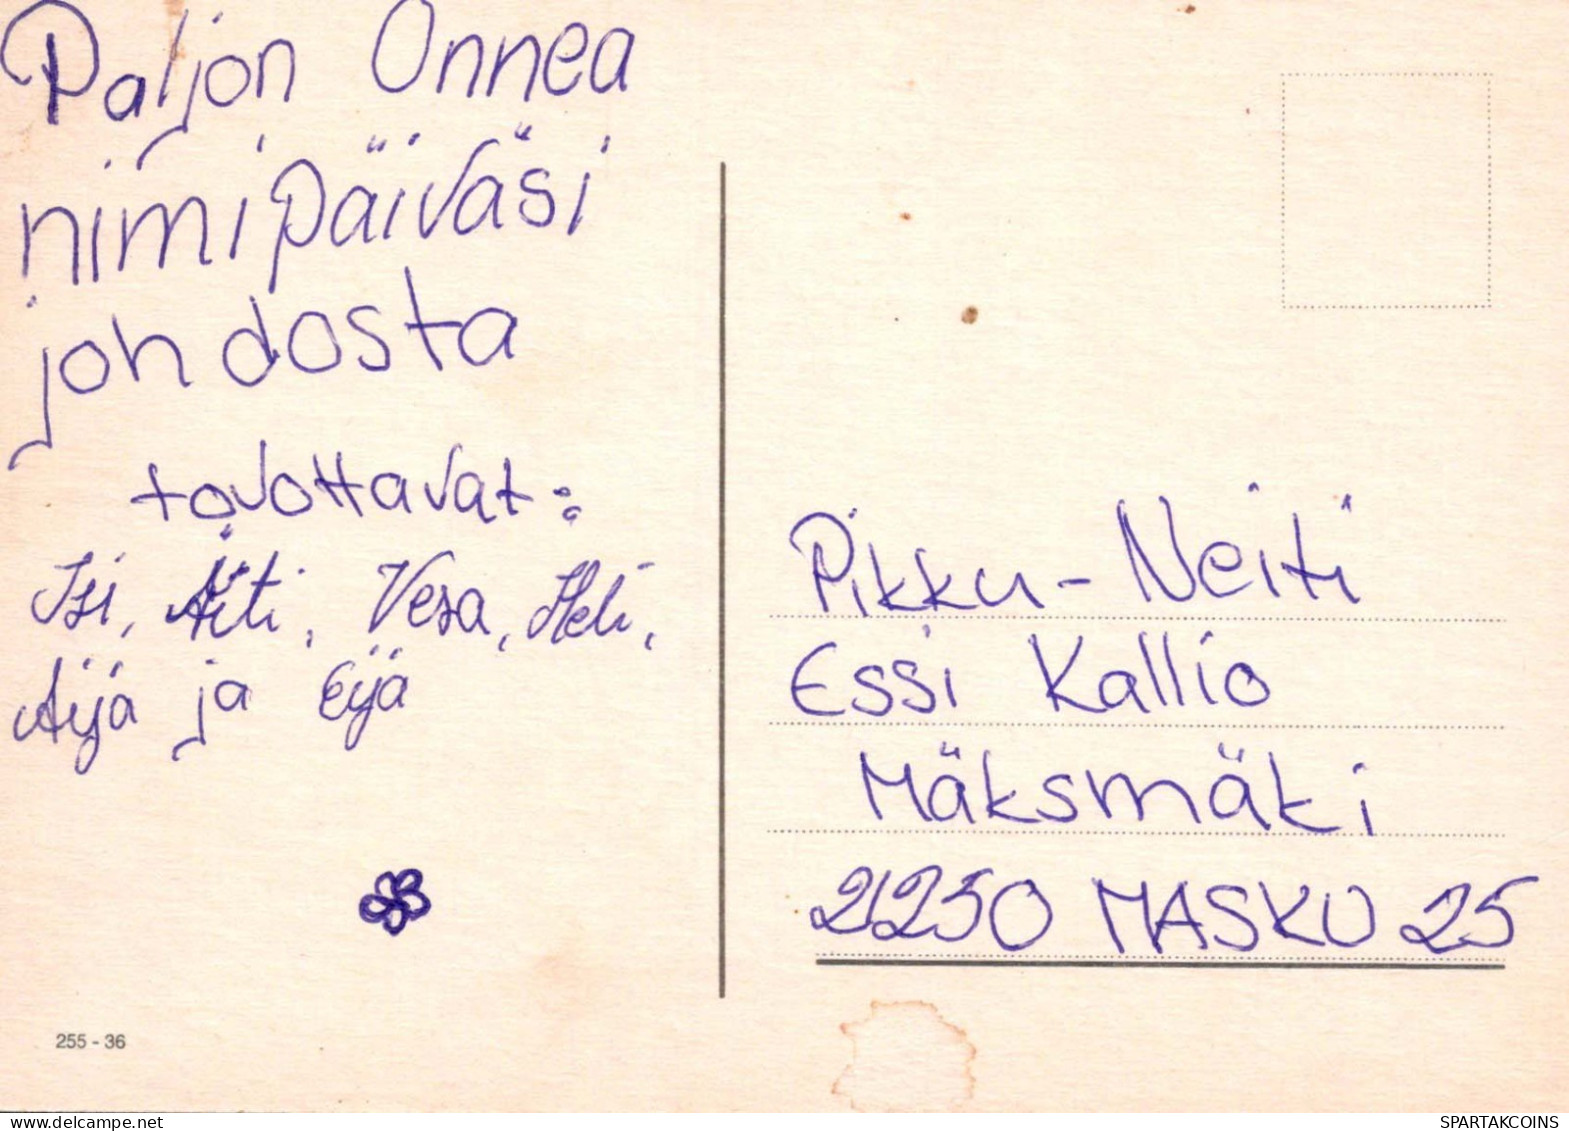 FIORI Vintage Cartolina CPSM #PAS593.IT - Fleurs